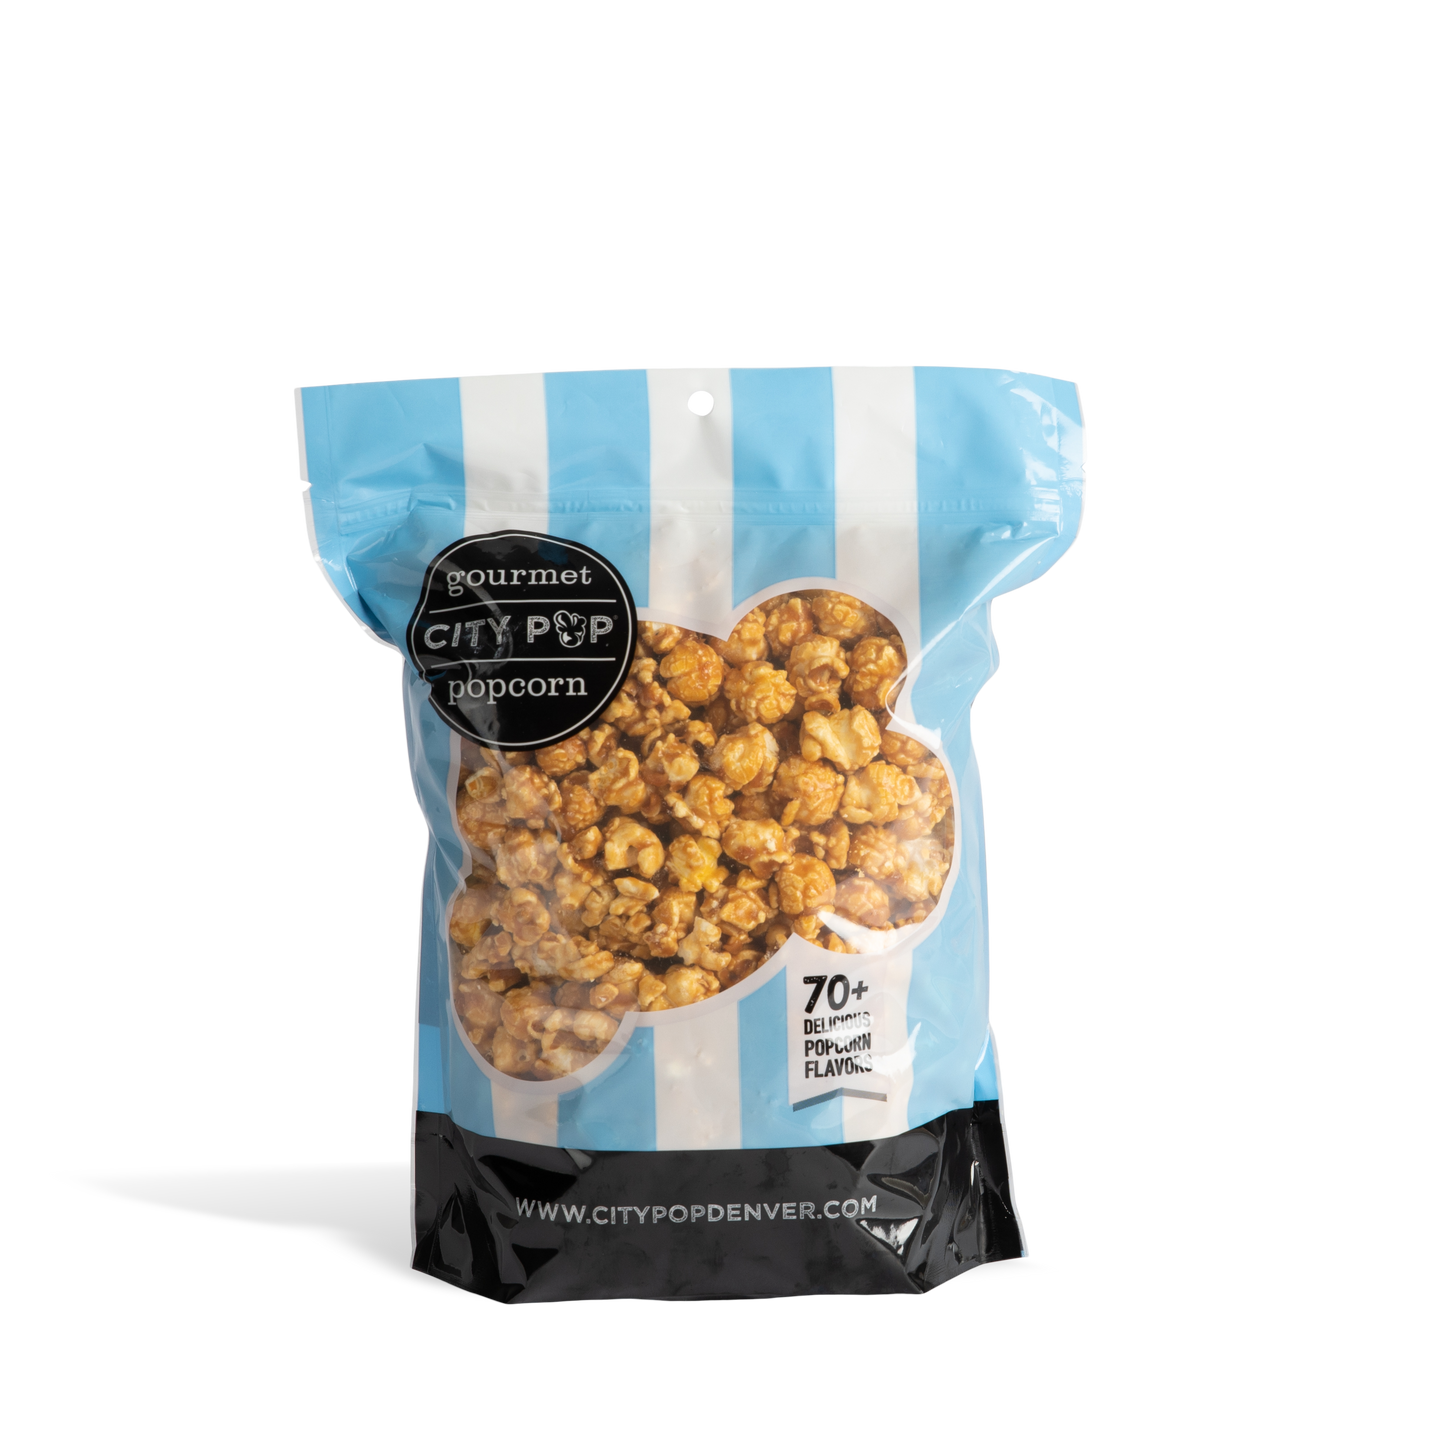 City Pop Classic Popcorn Combo Caramel Popcorn Bag